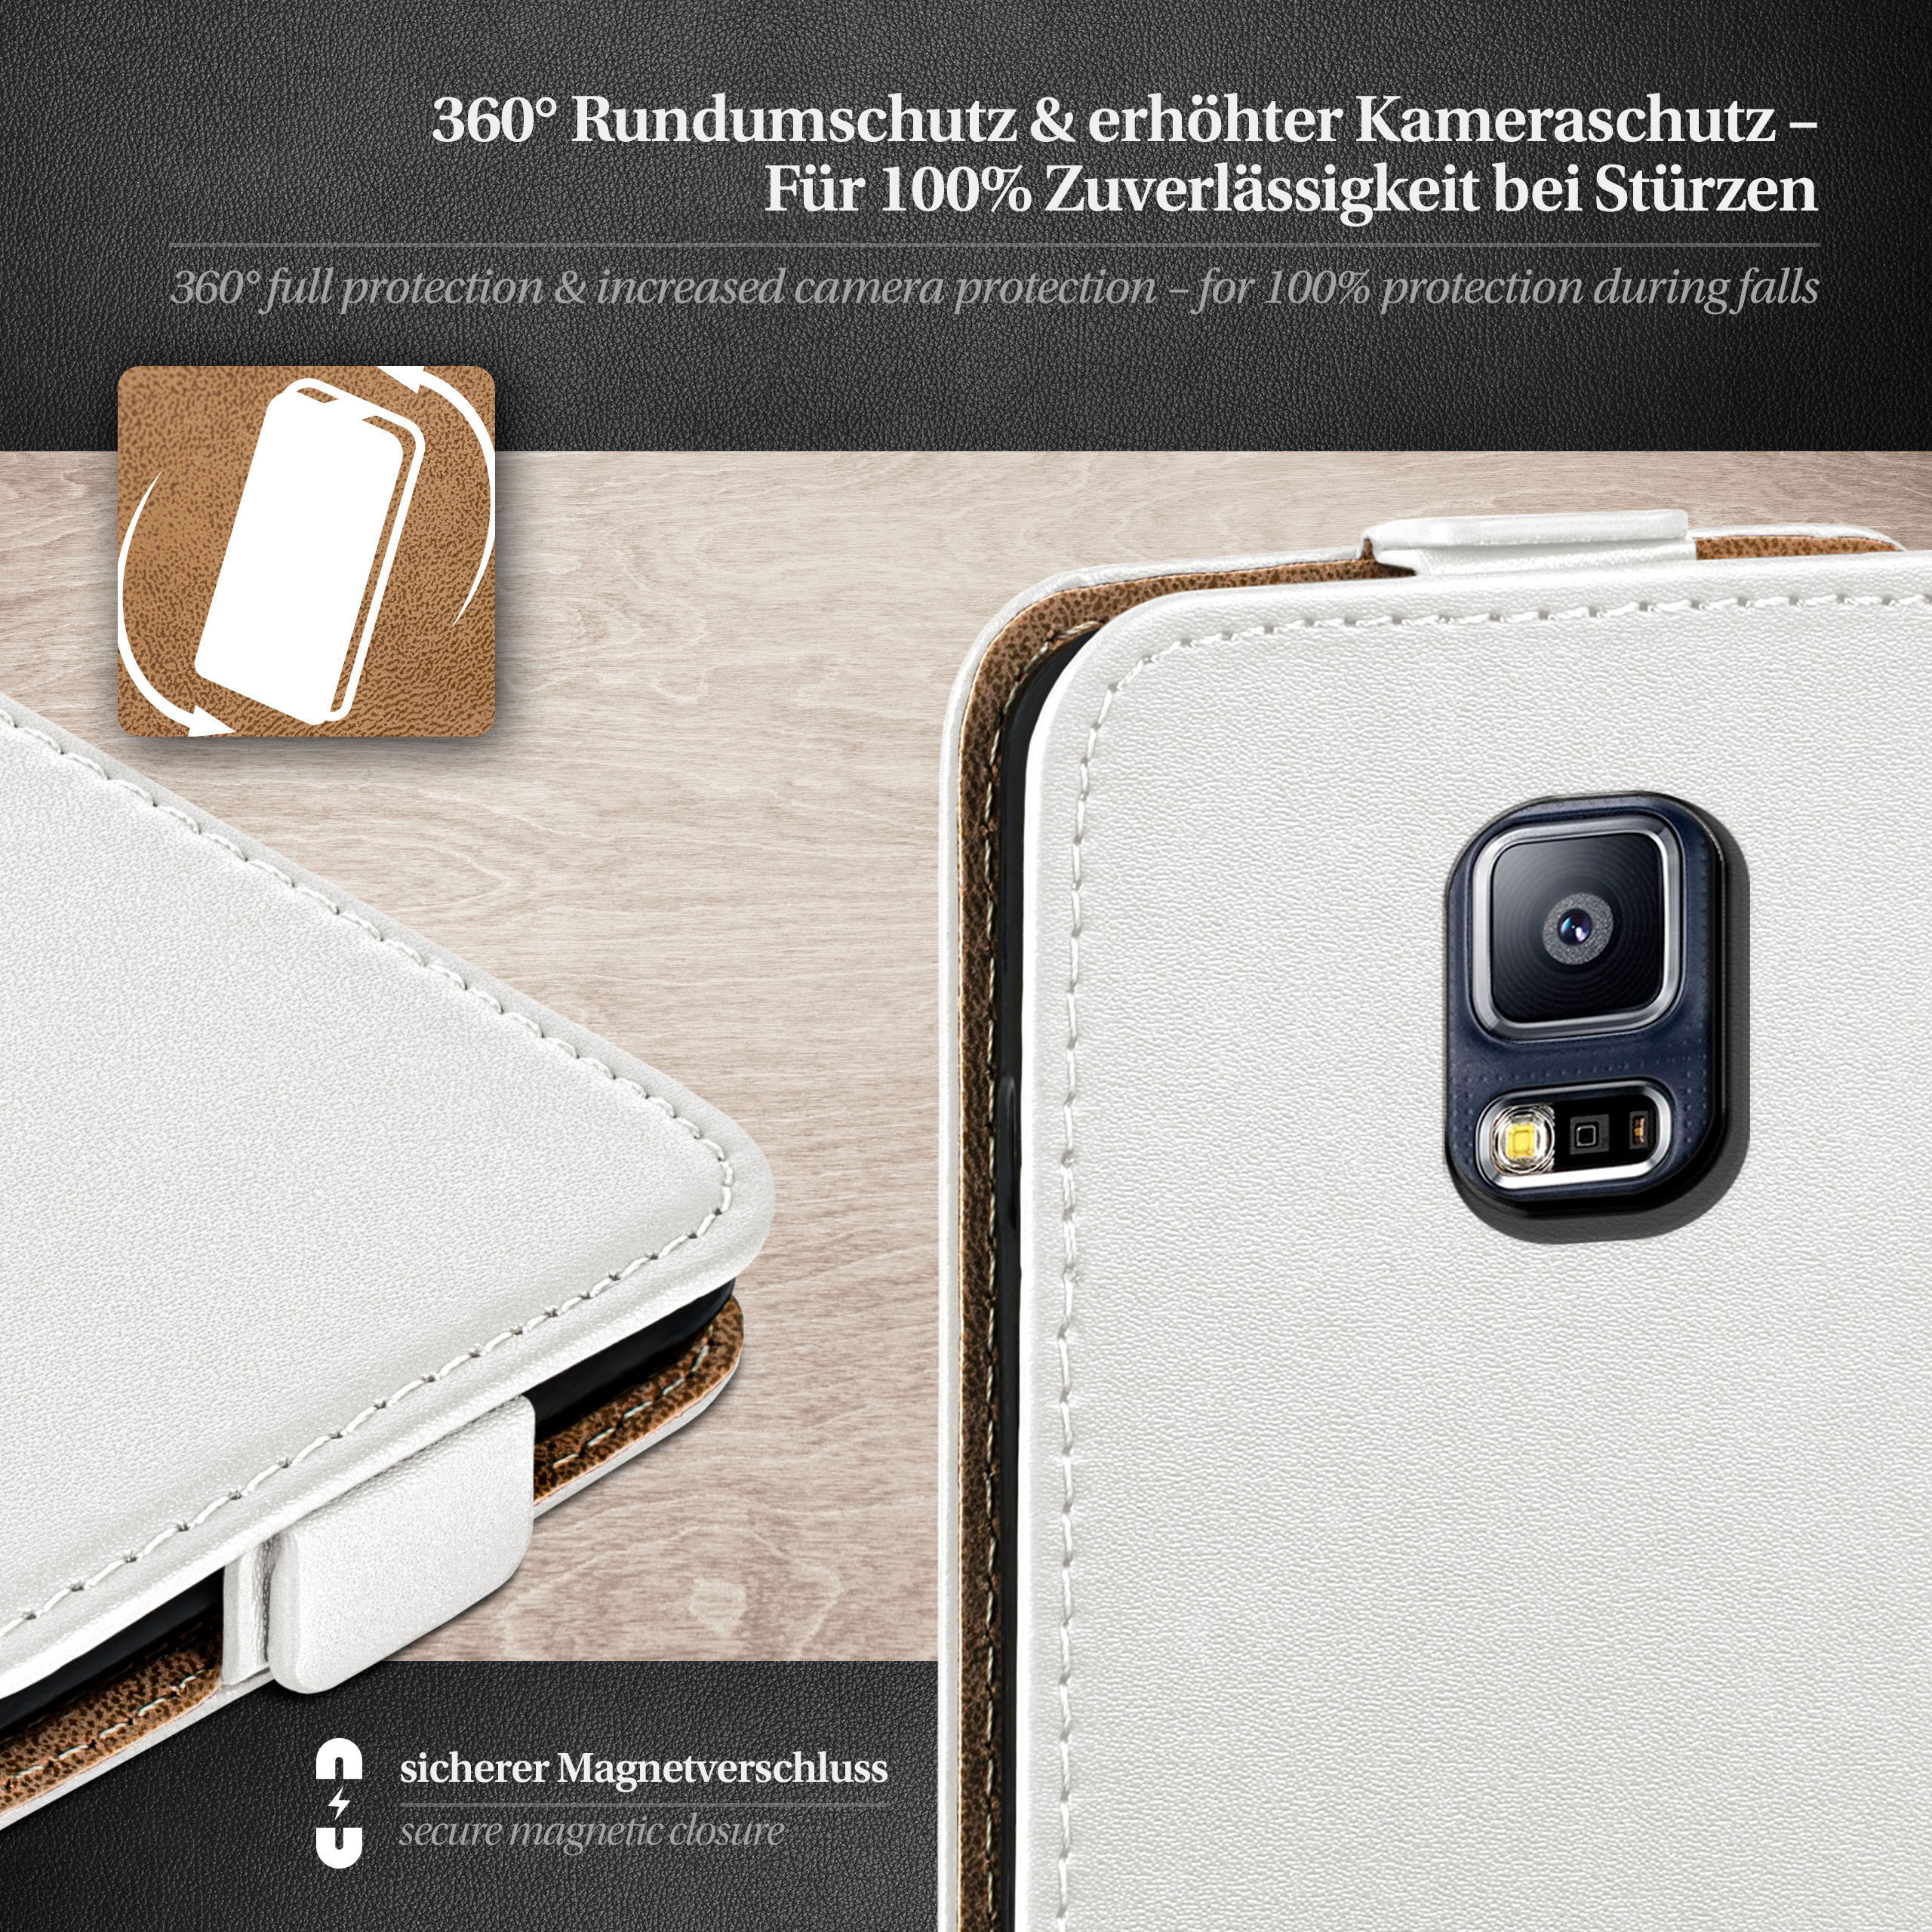 S5 Neo, Case, Cover, MOEX Flip Galaxy / Flip Samsung, Pearl-White S5